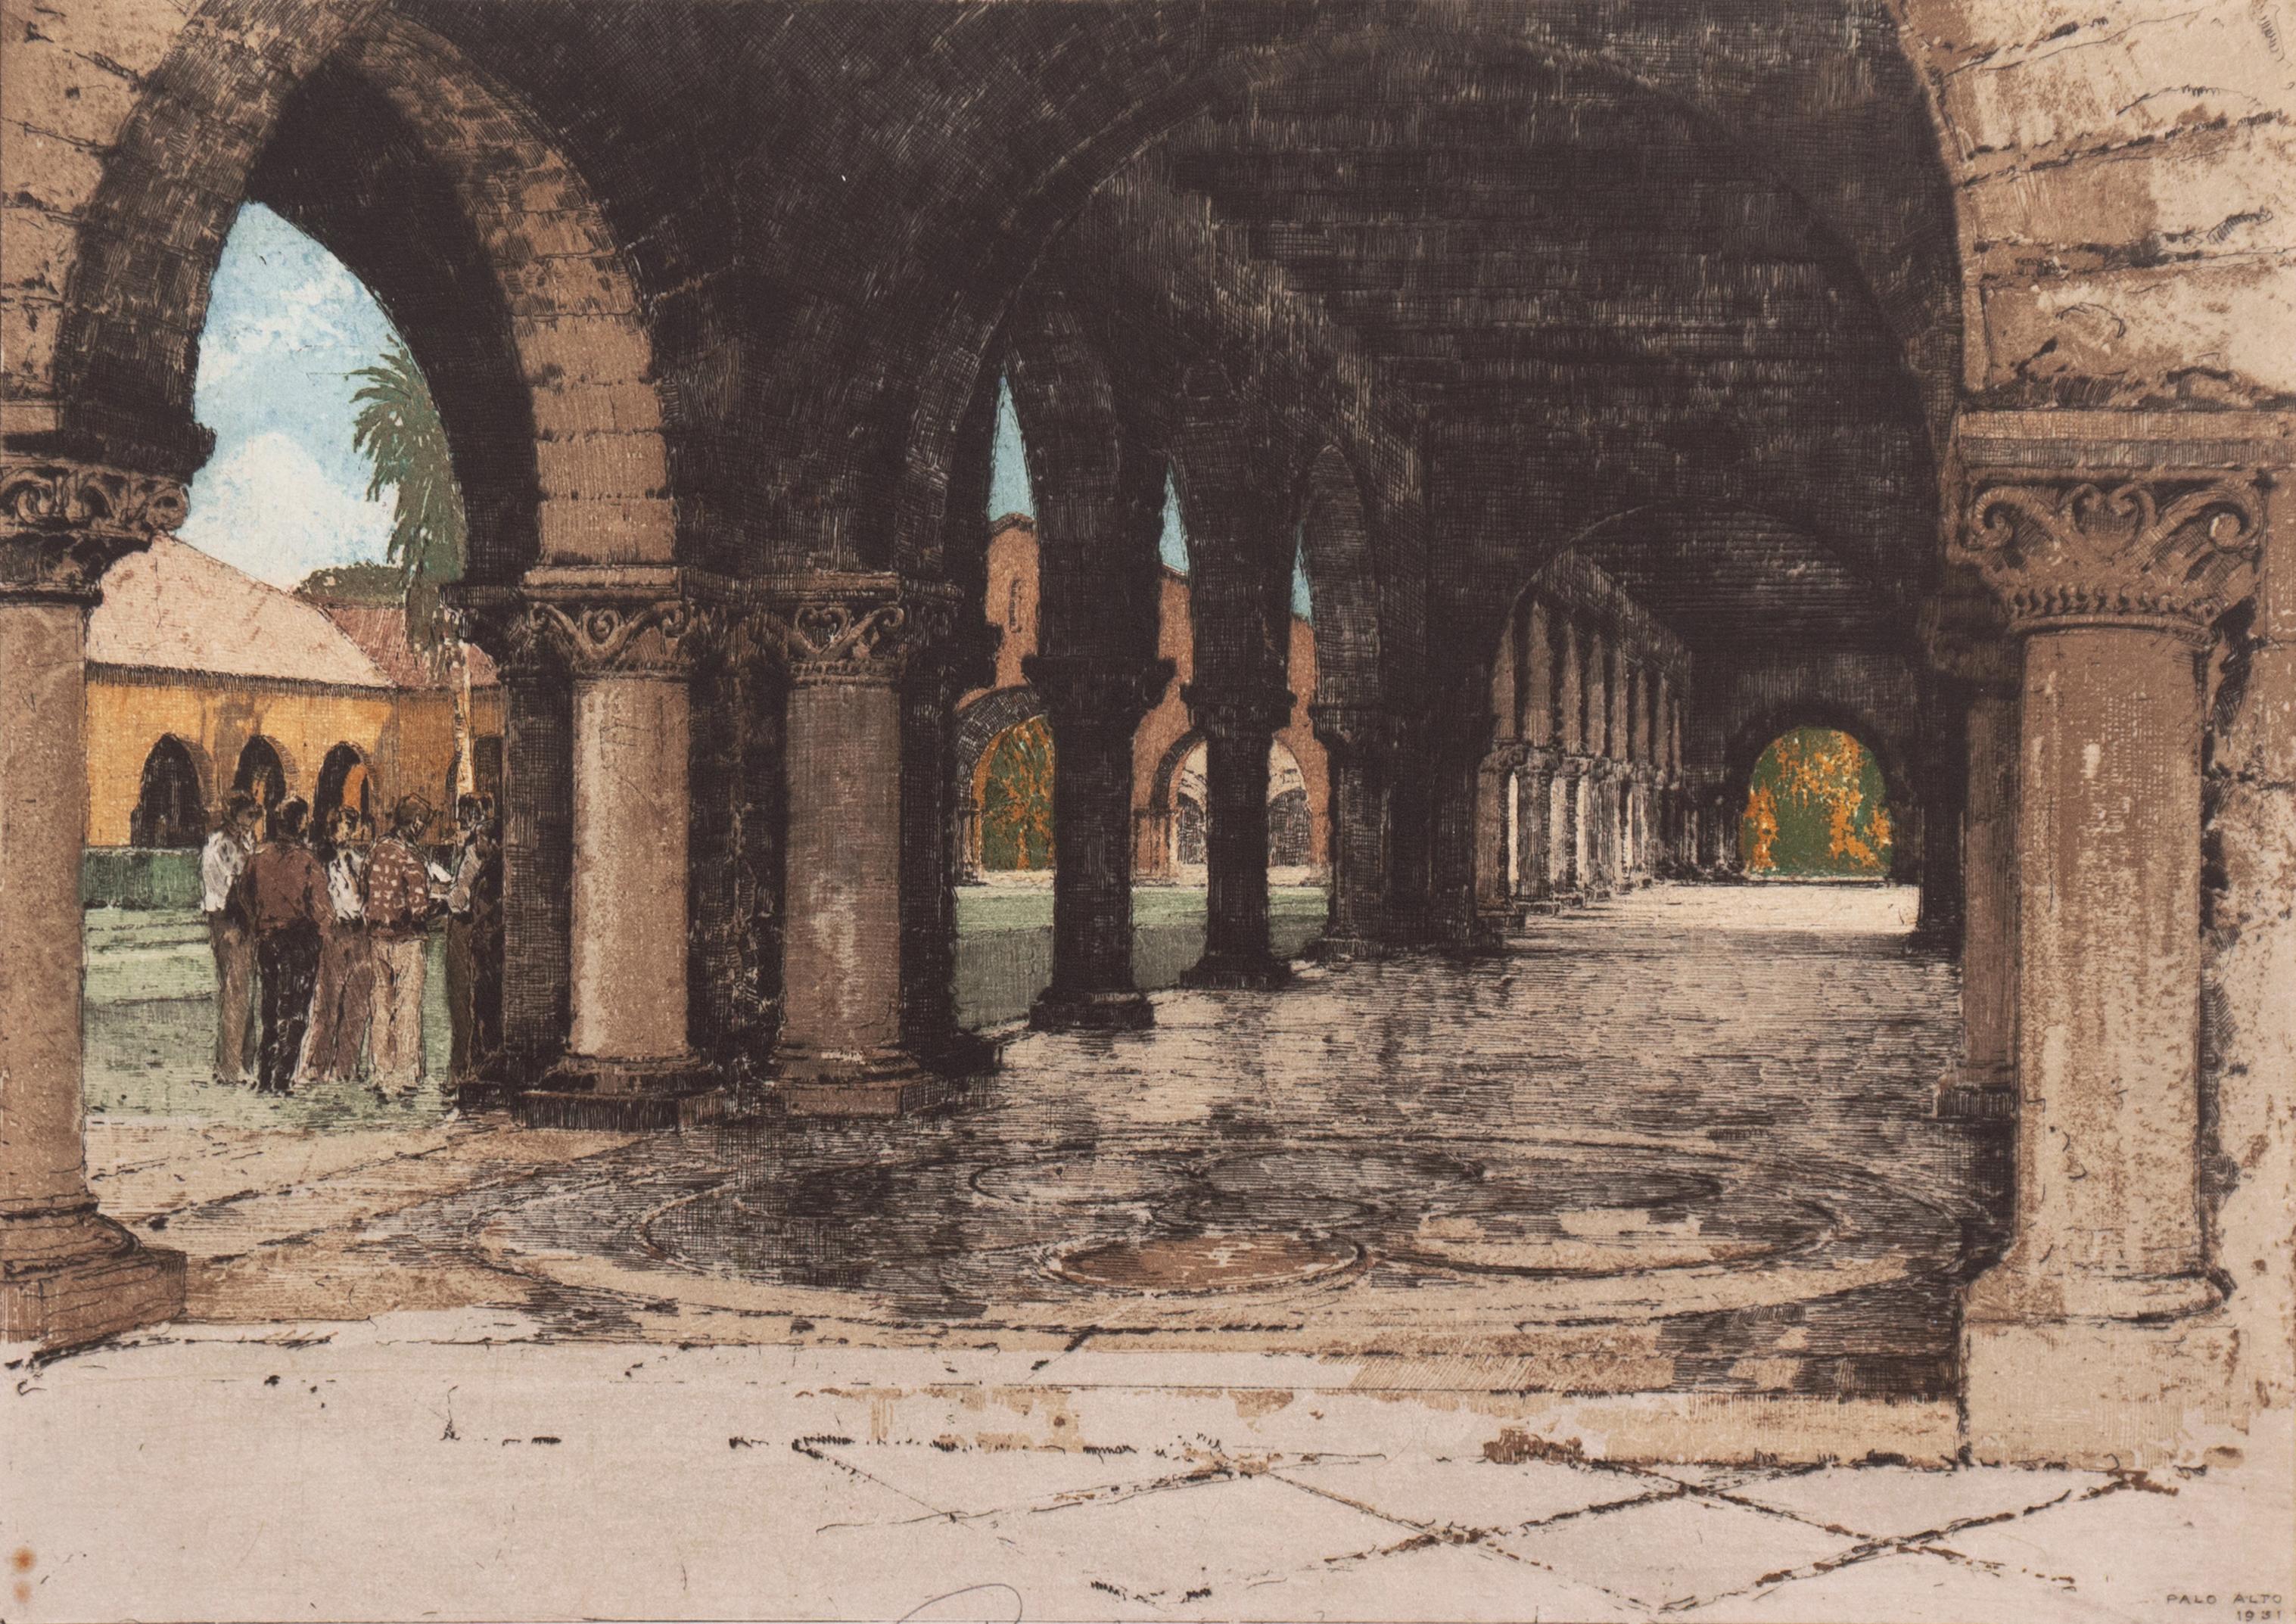 Luigi Kasimir Landscape Print - 'Stanford University, the Quad', Palo Alto, Vienna Academy, Metropolitan Museum